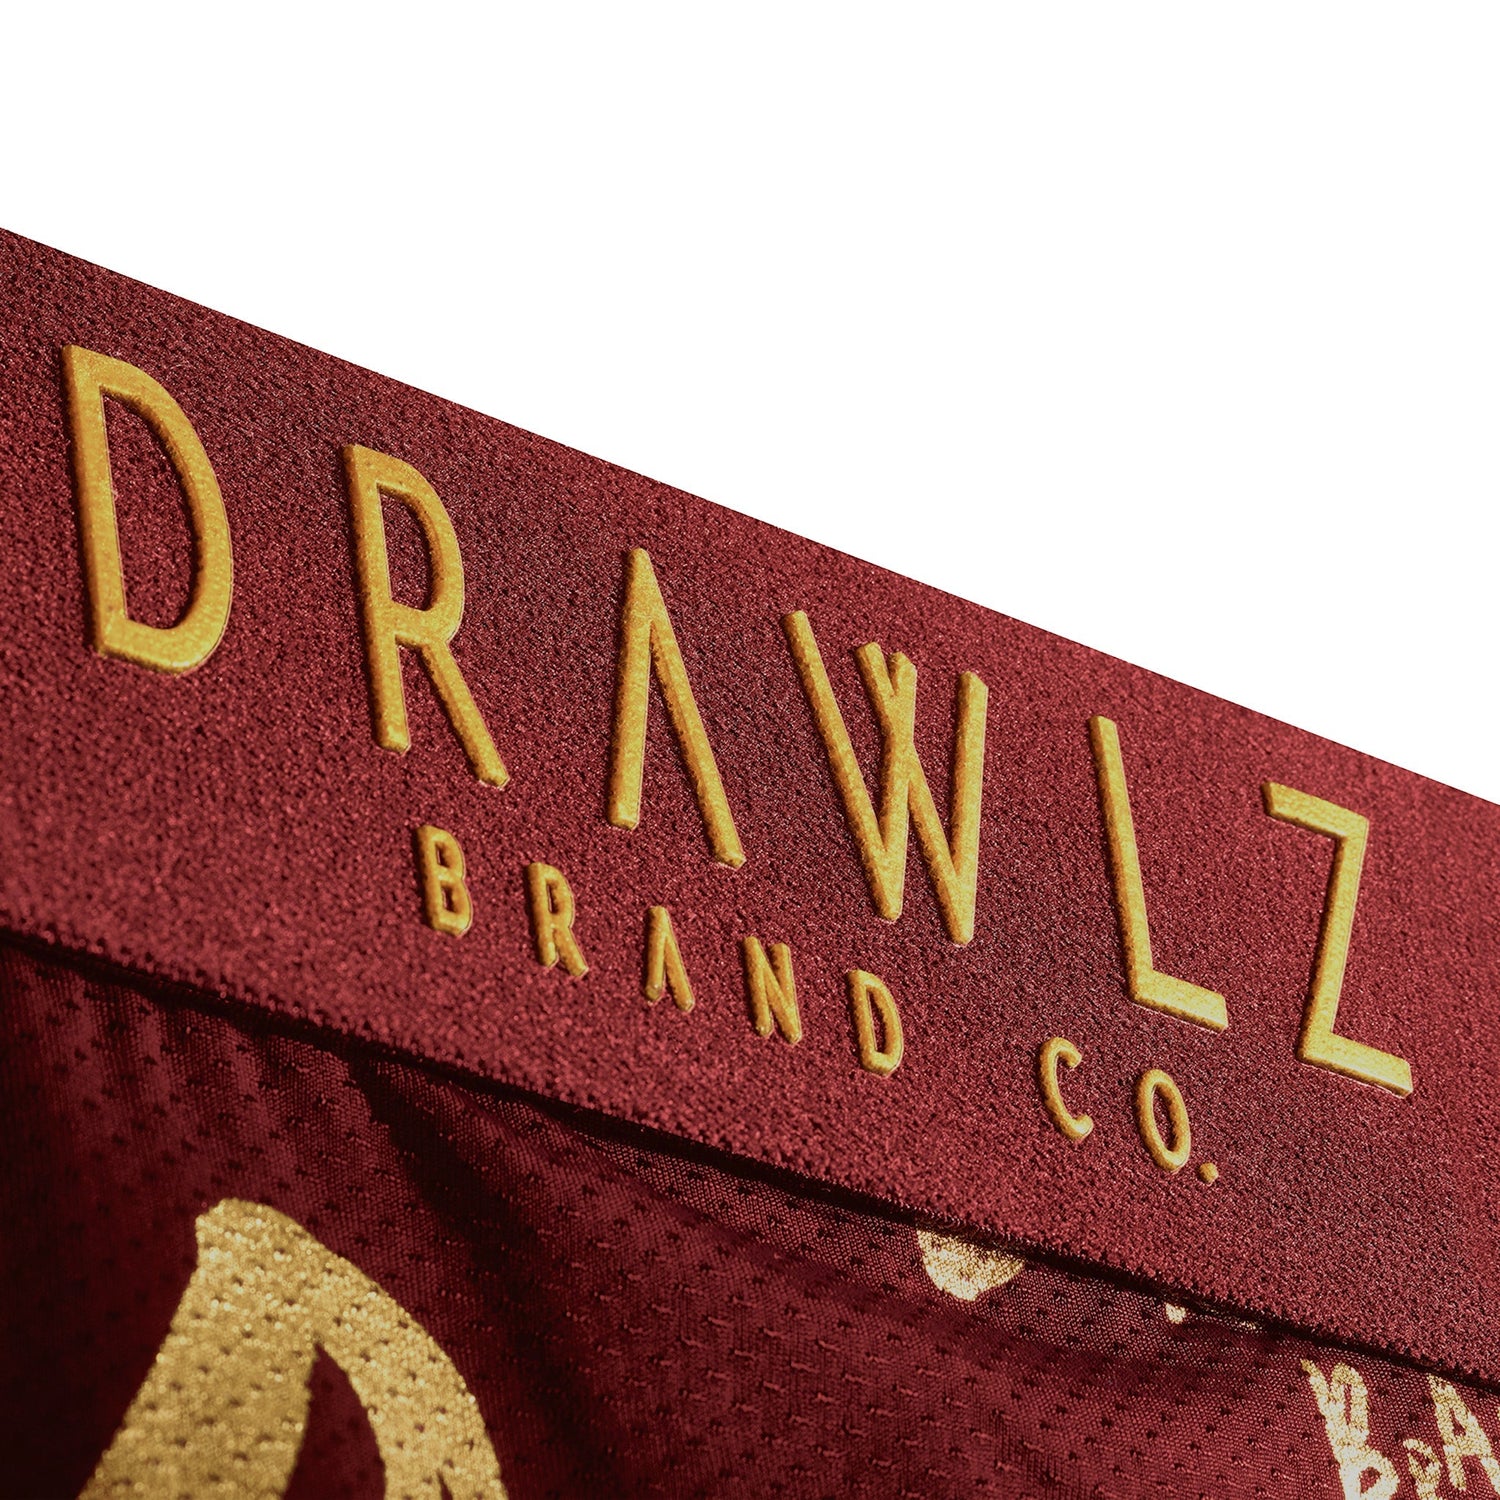 Drawlz Brand Co. , LLC Boxer Brief 2023 DBC Signaturez Gold Limited Edition